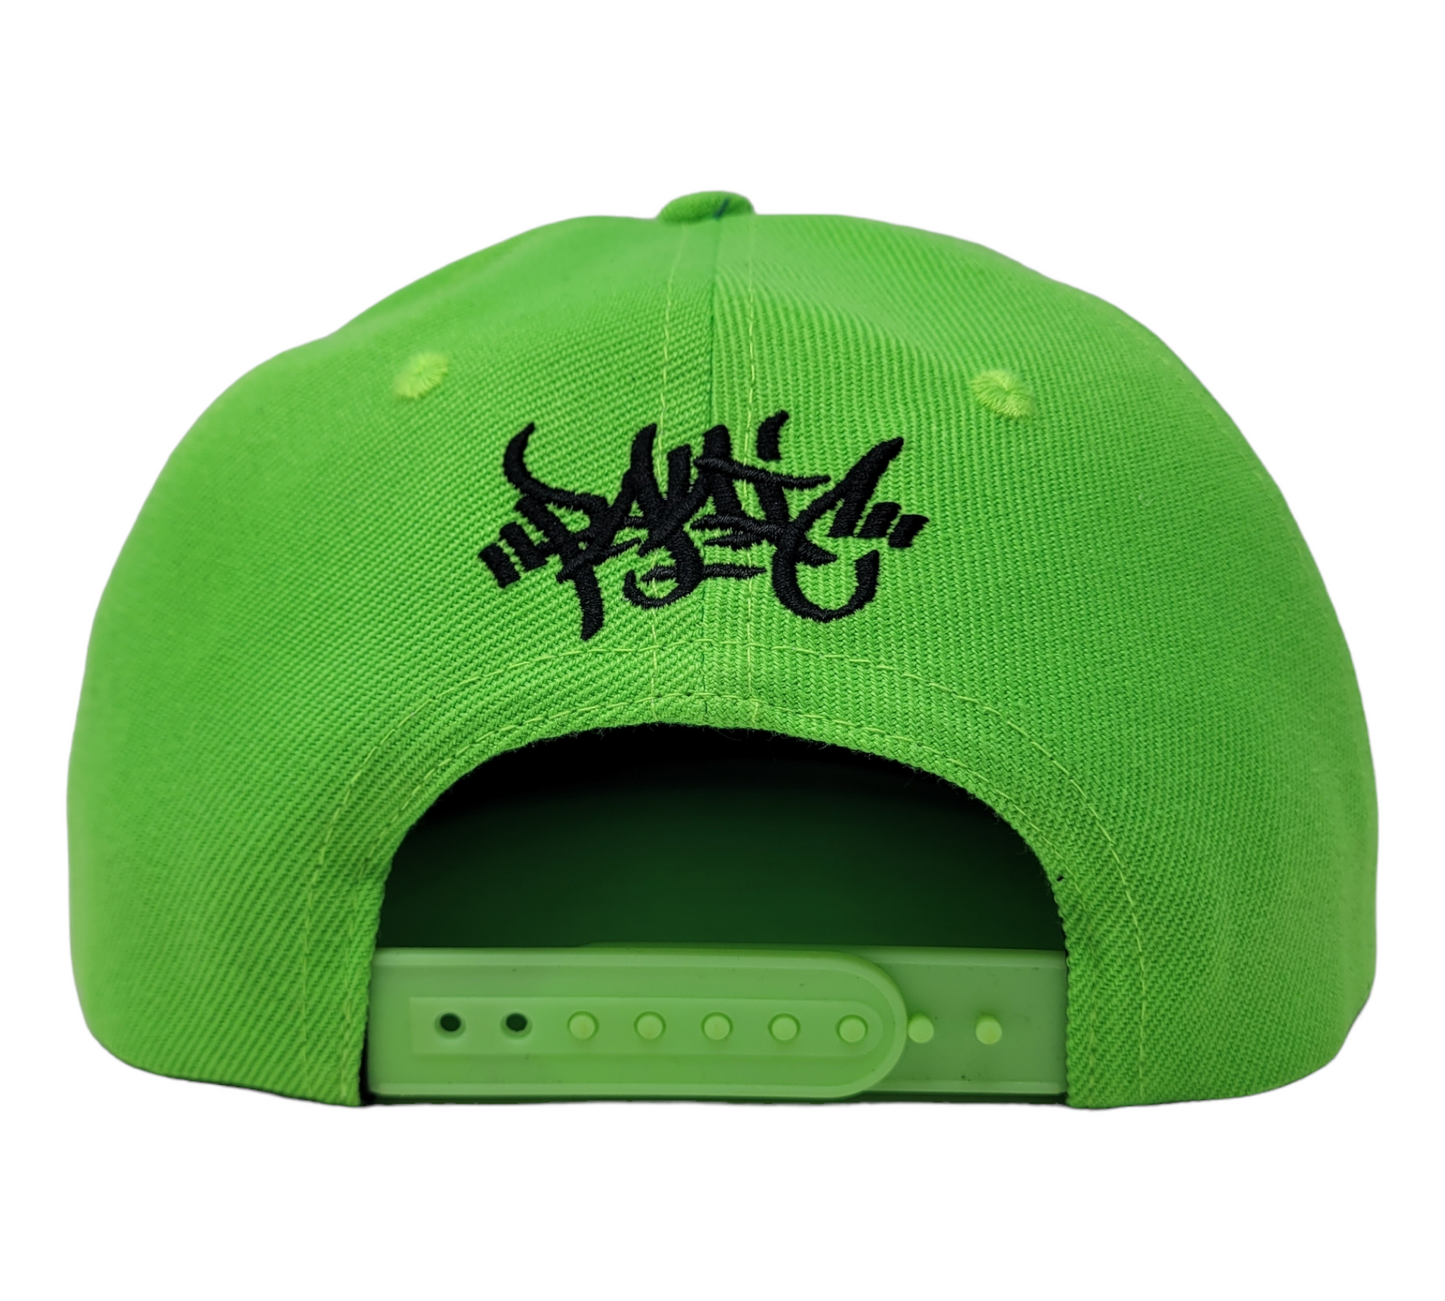 THE FLUORESCENT GREEN 3D TAG LOGO SNAPBACK BASEBALL HAT